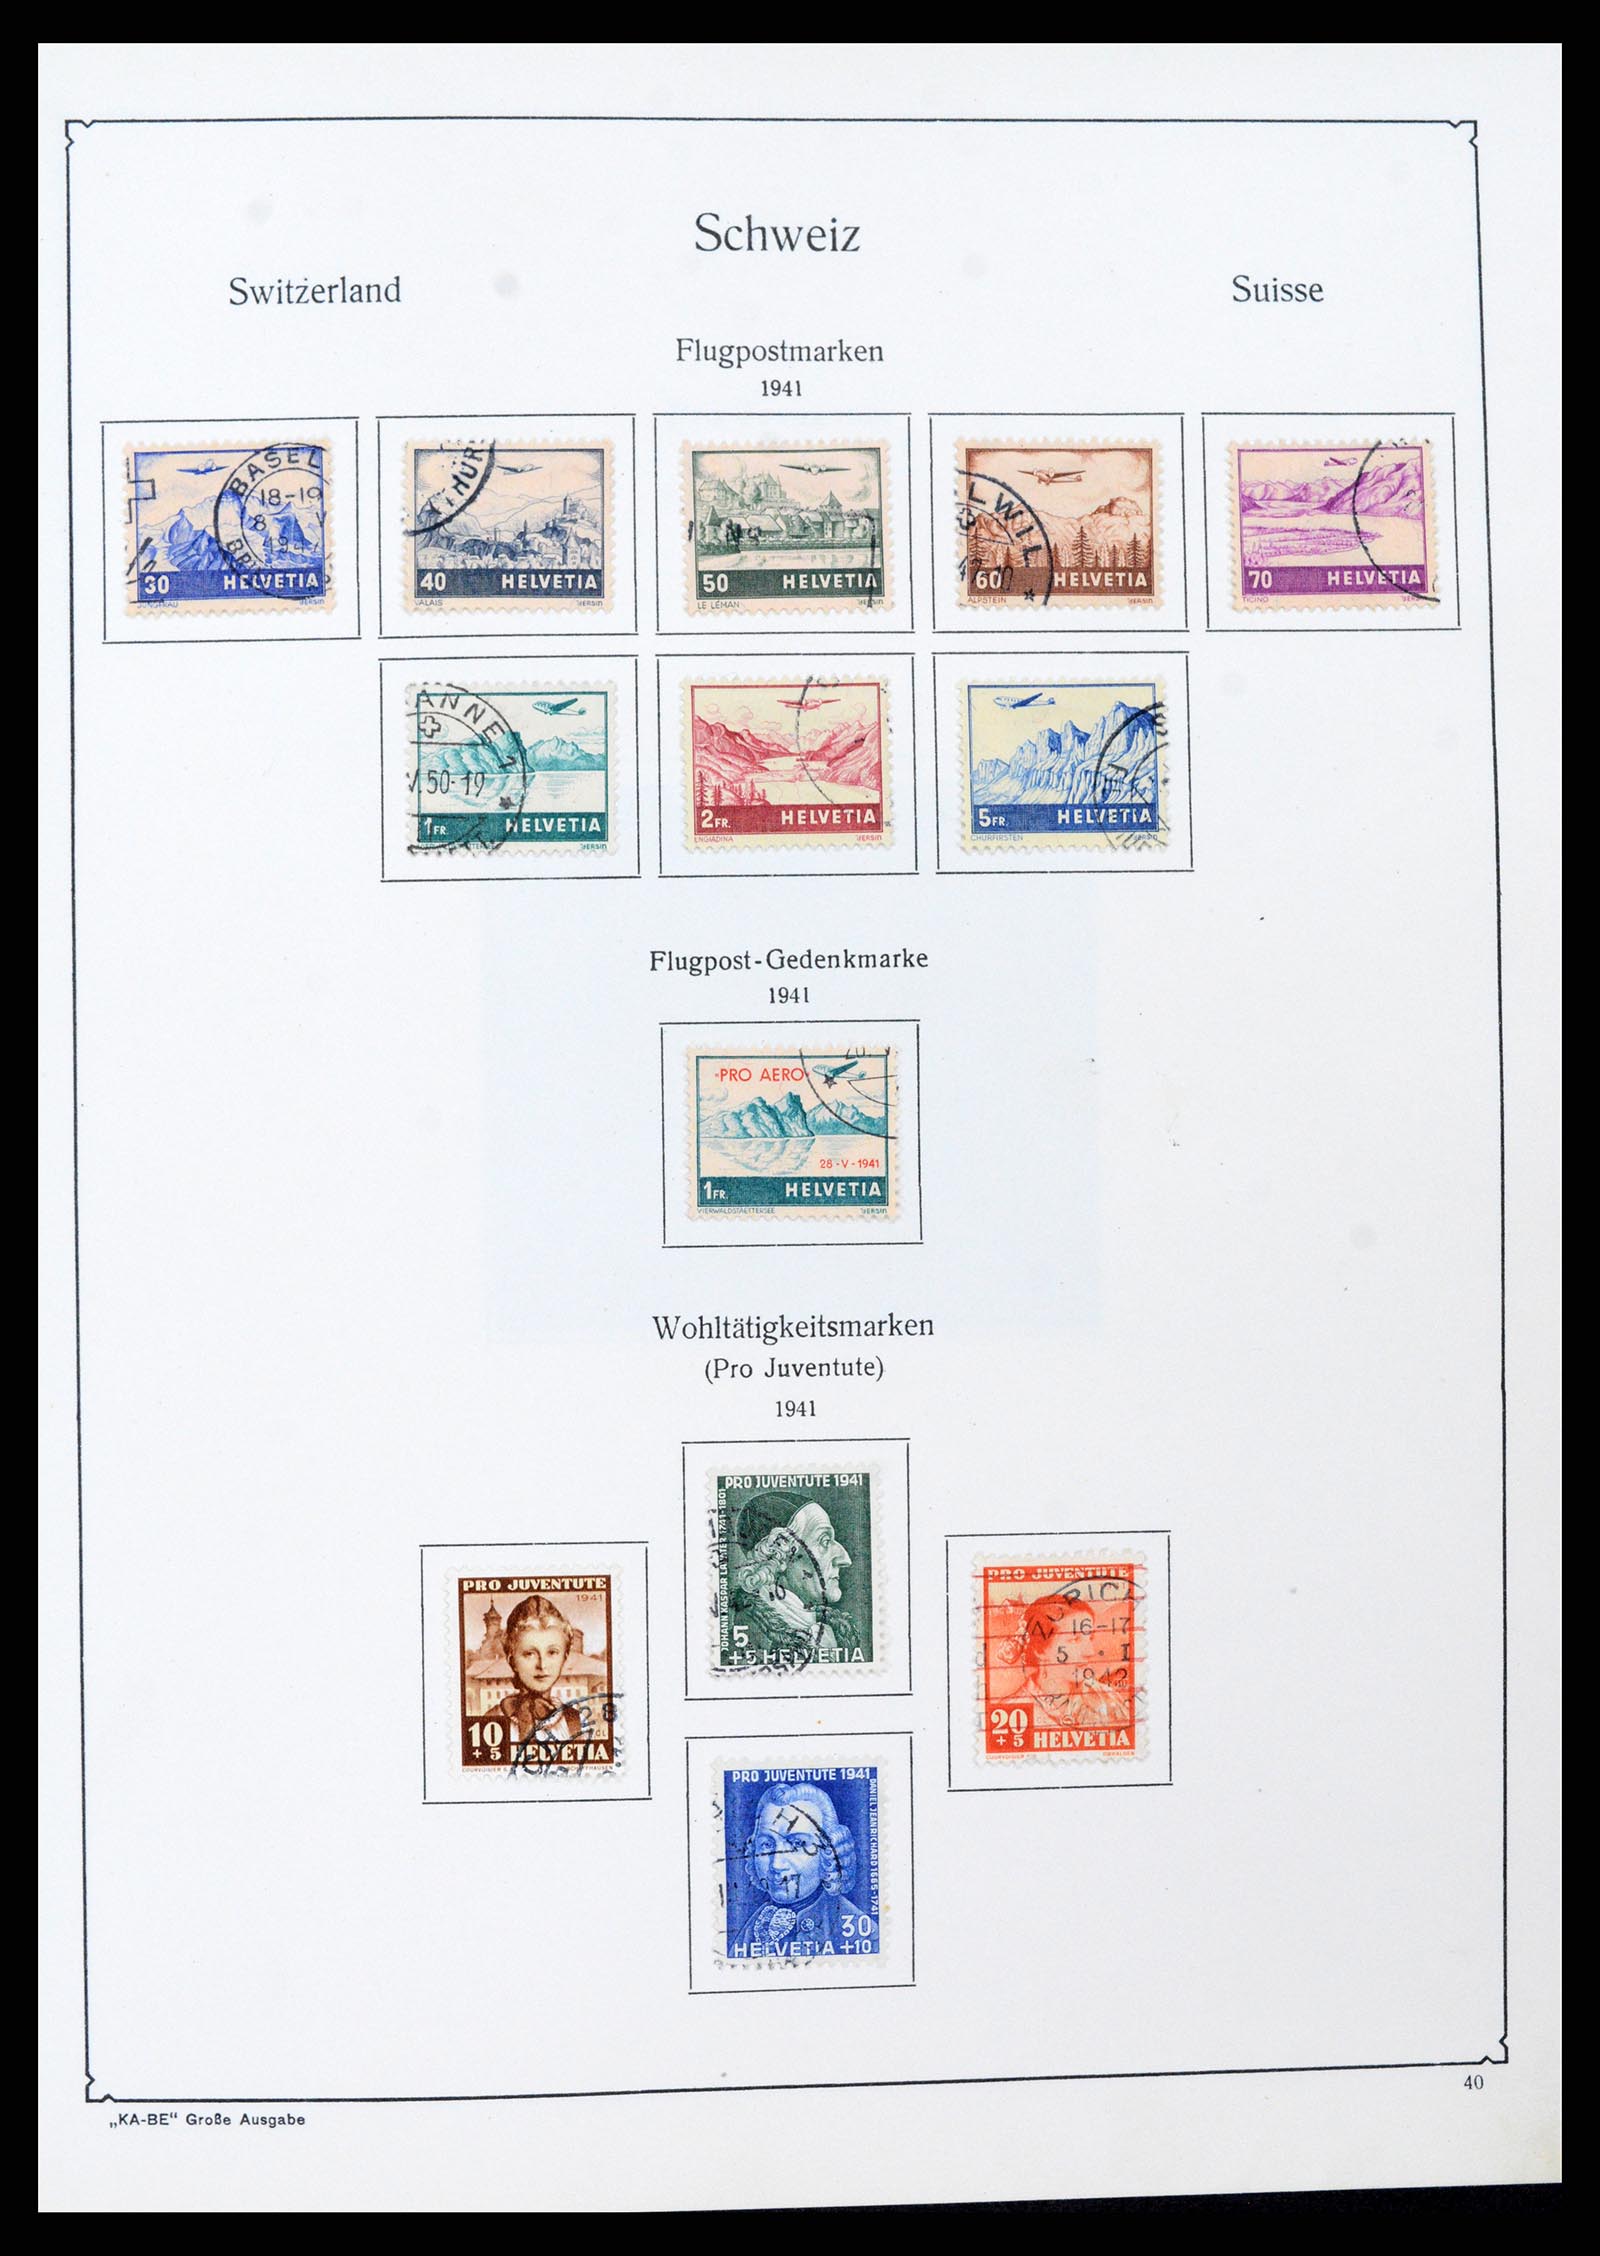 37588 039 - Stamp collection 37588 Switzerland 1854-1974.